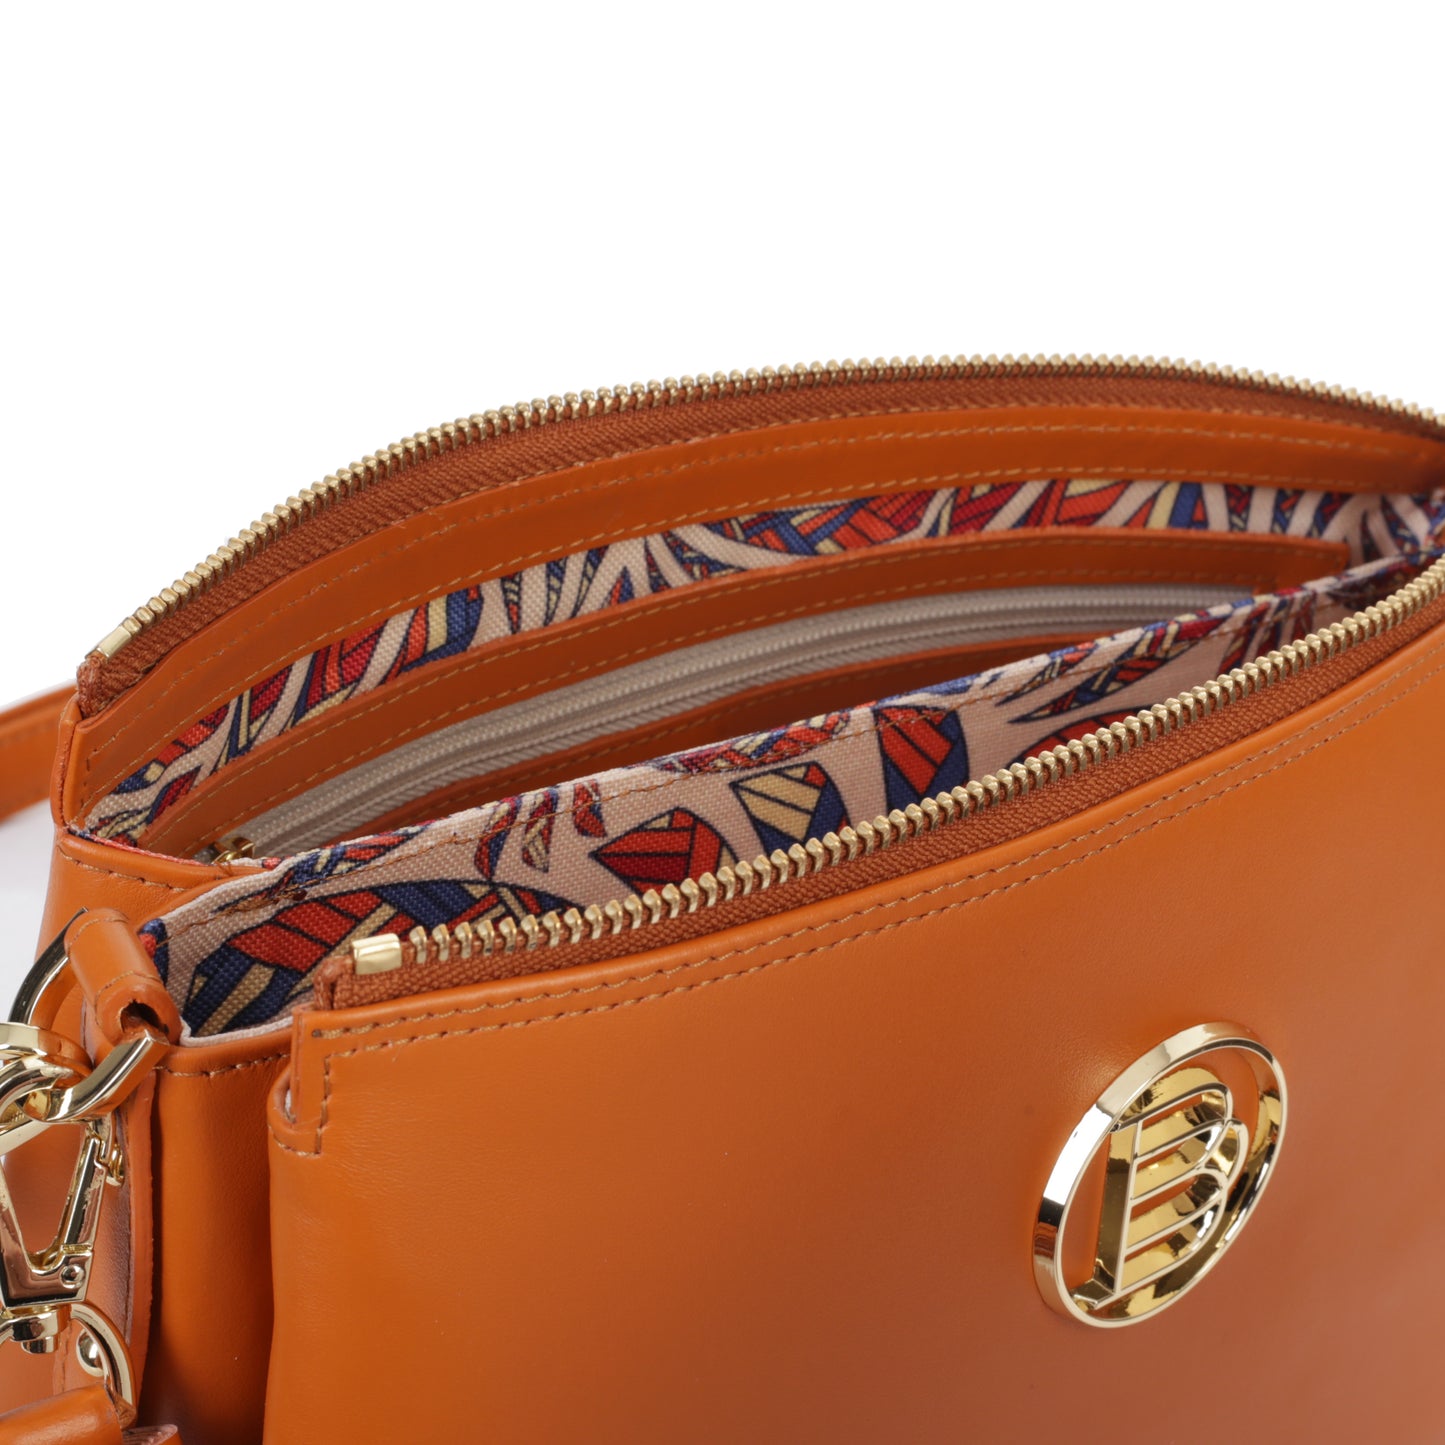 ELISE NAPA GINGER women's leather handbag